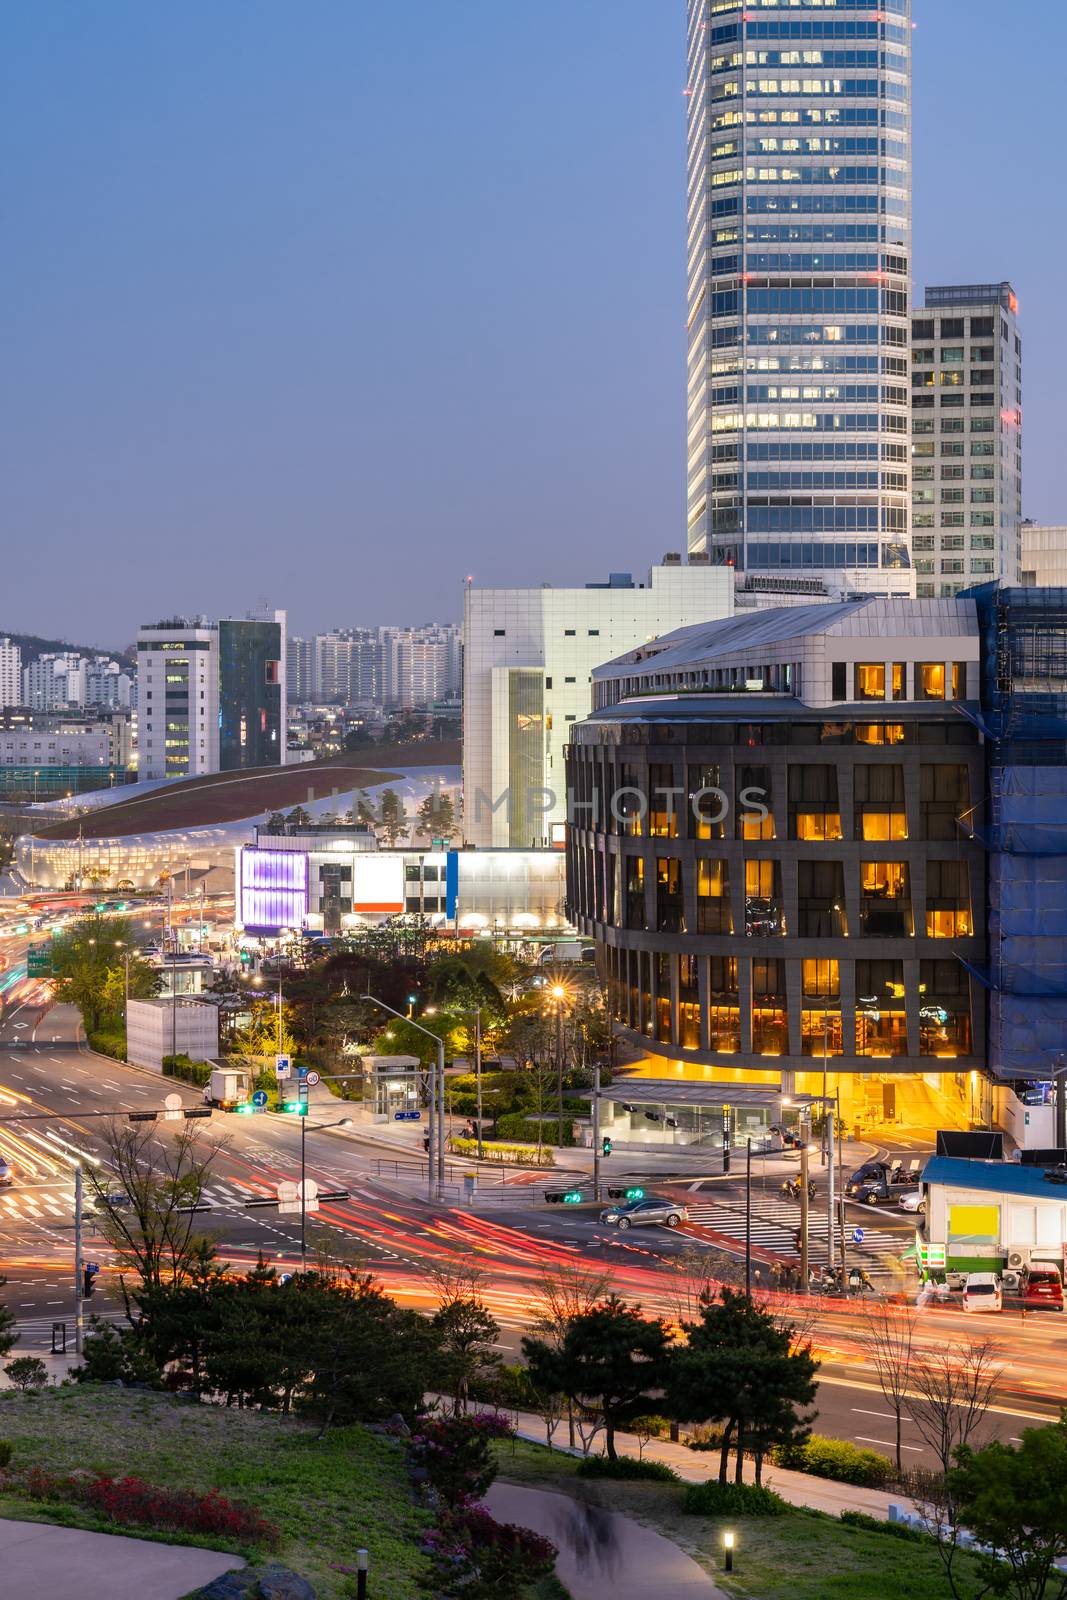 Dongdaemun gate Seoul by vichie81